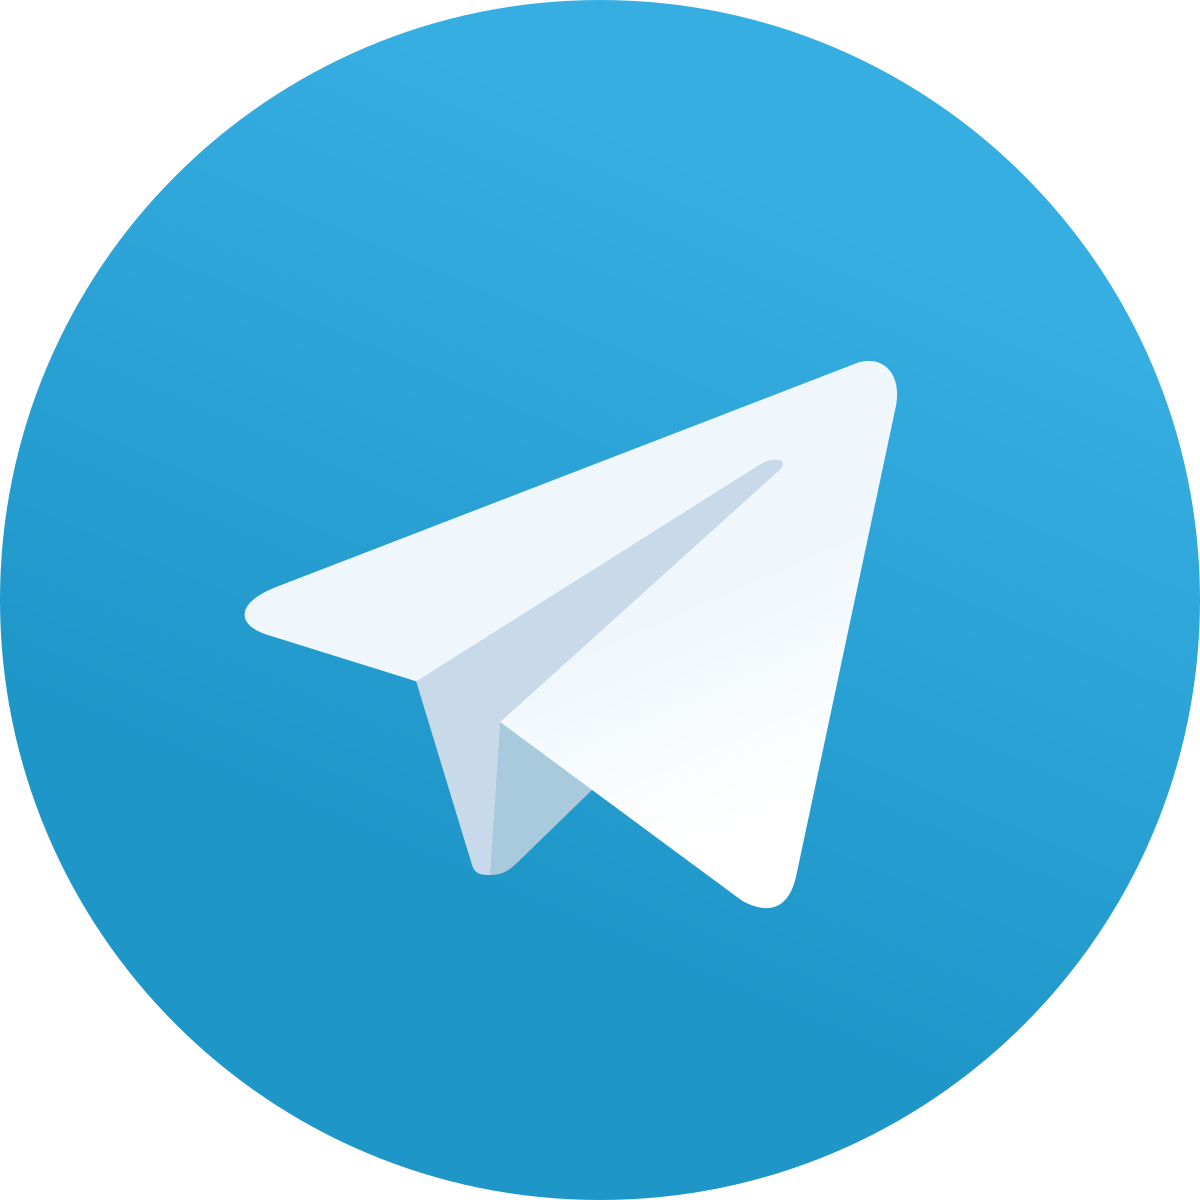 #30 – Telegram, porquê?